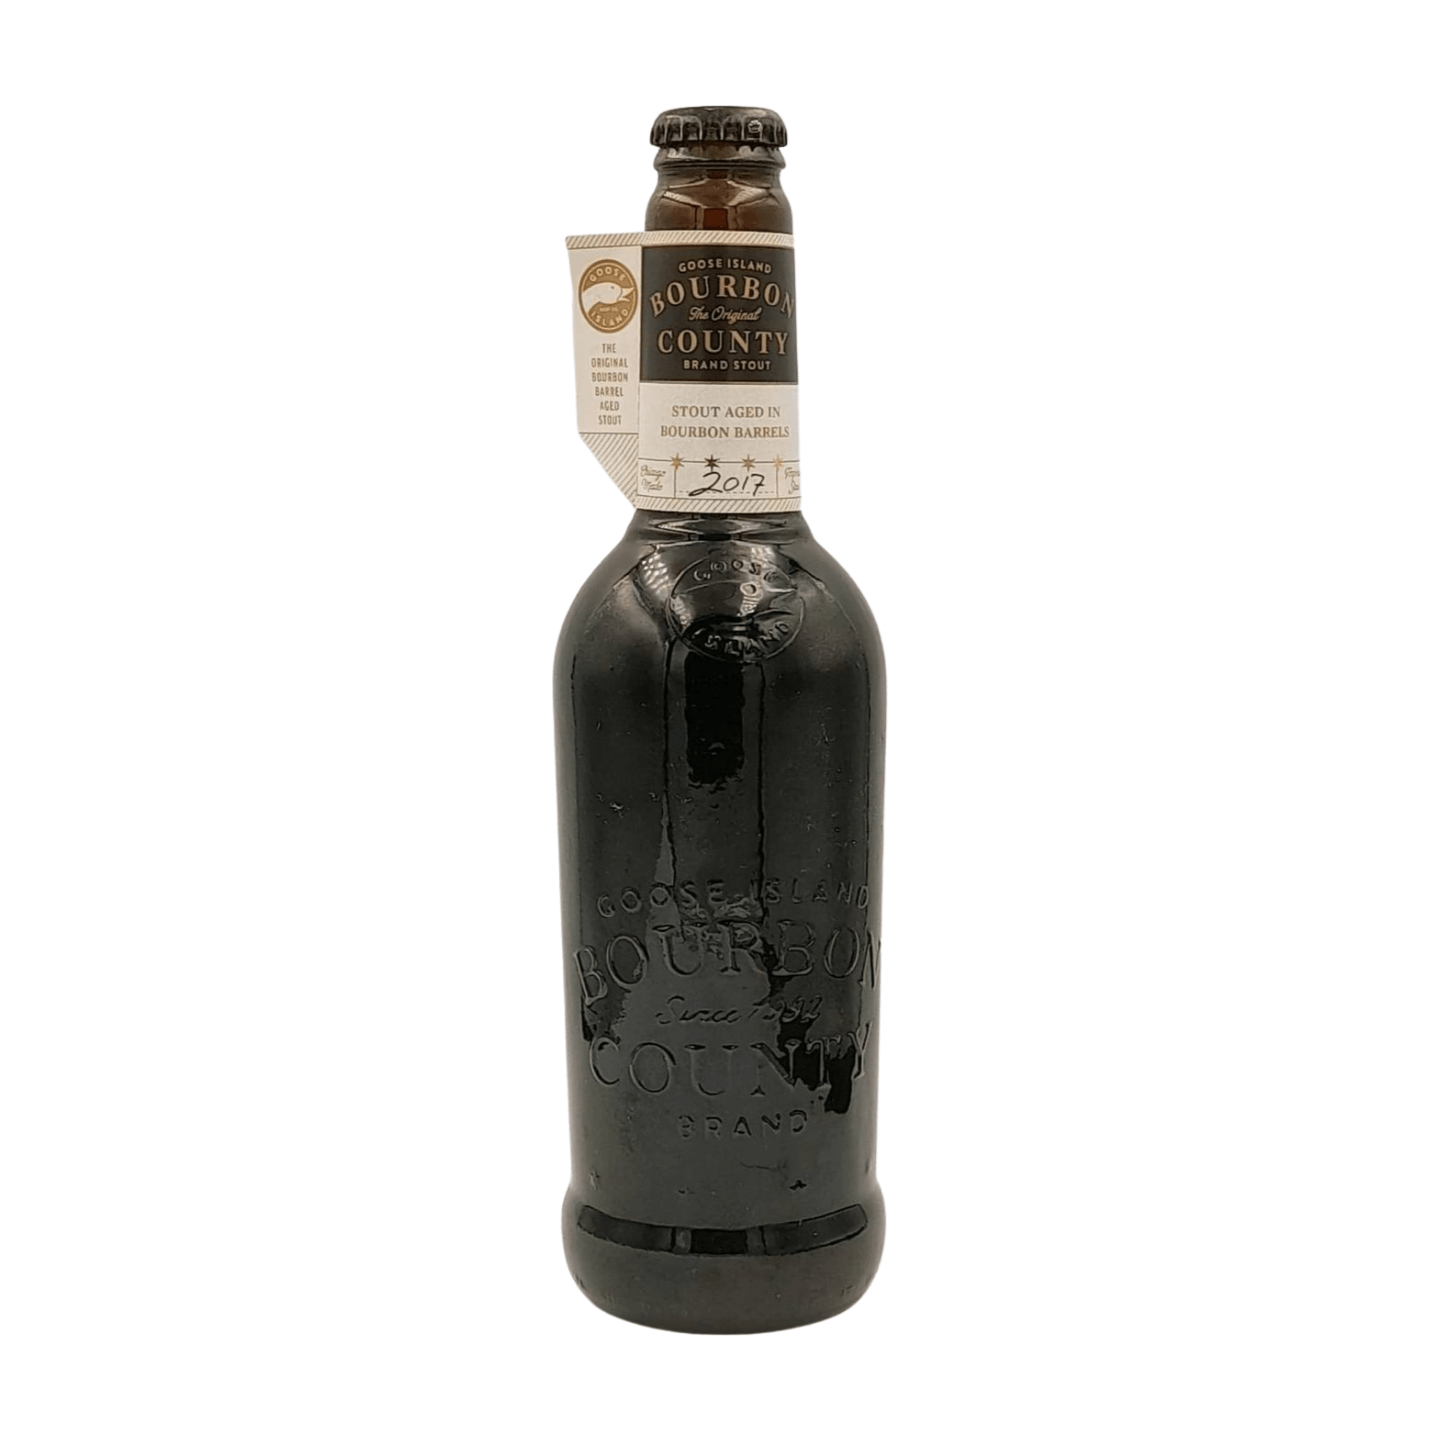 Goose Island Beer Co. Bourbon County Brand Stout 2017 | Bourbon BA Stout Webshop Online Verdins Bierwinkel Rotterdam